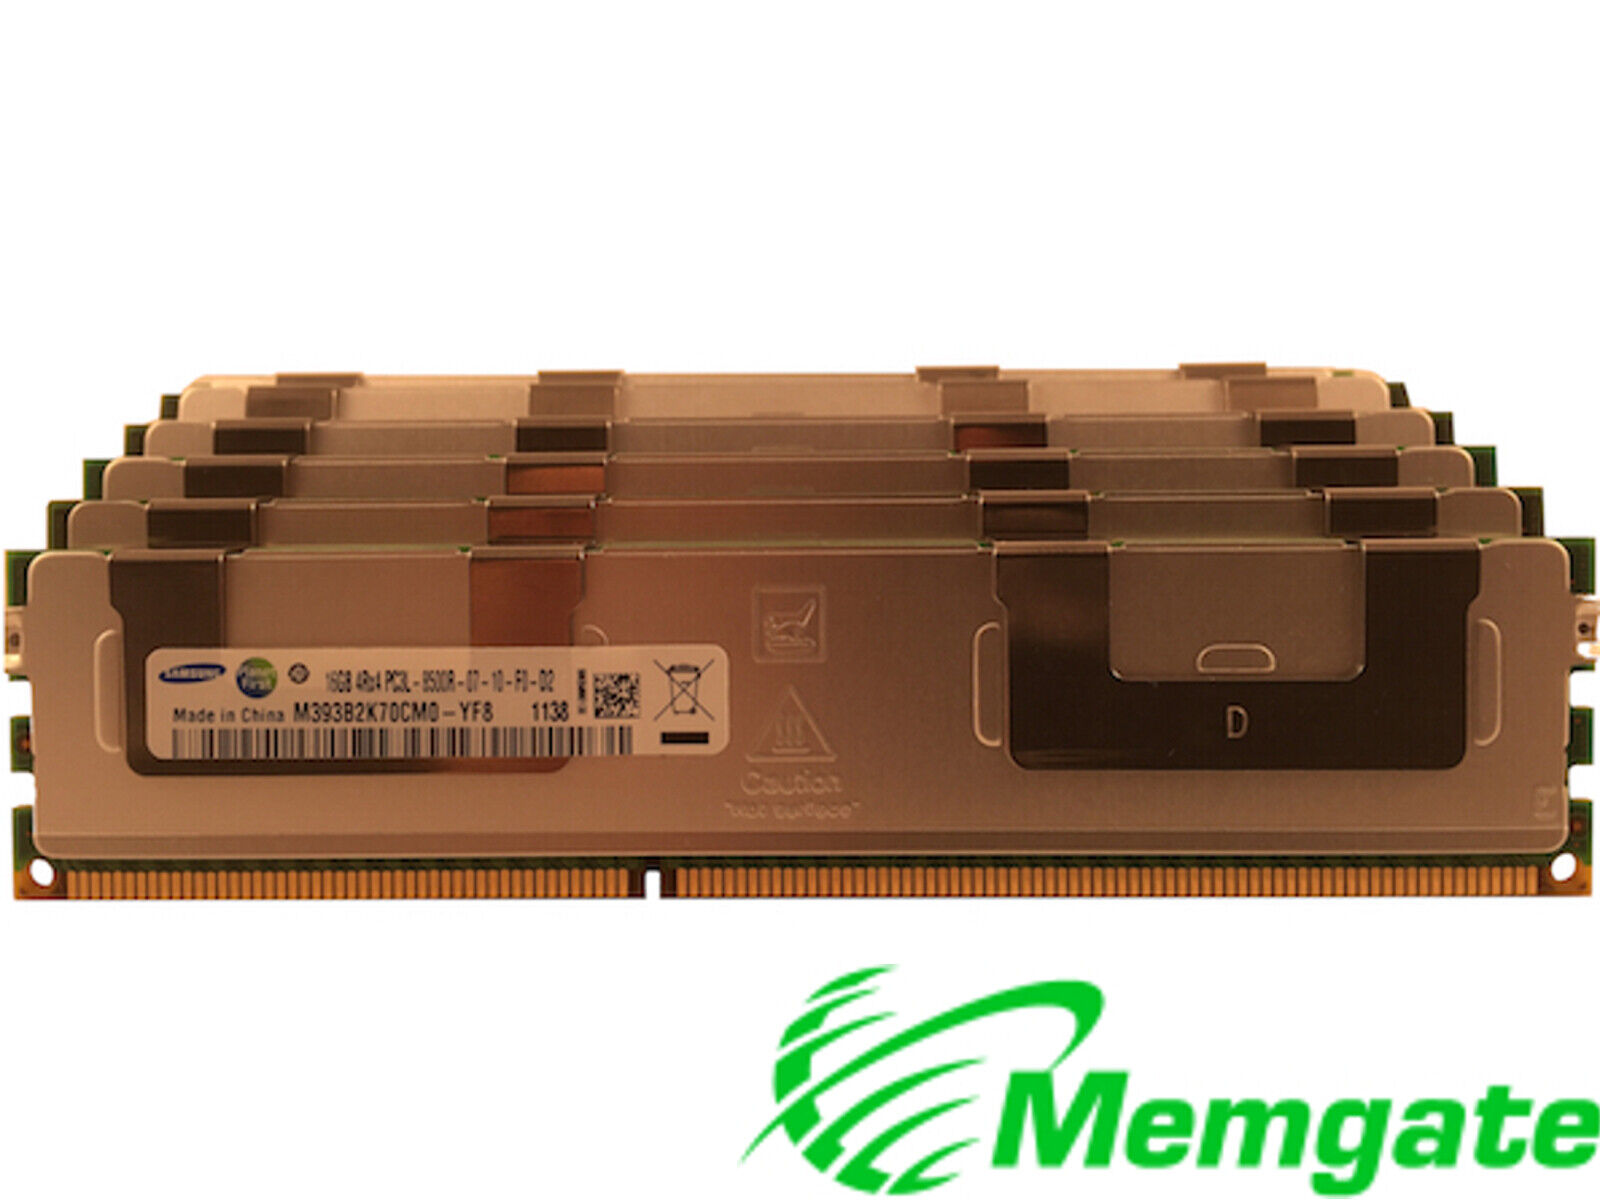 128GB (8x16GB) PC3-8500R 4Rx4 DDR3 ECC Reg Memory for Apple Mac Pro Mid 2010 5,1